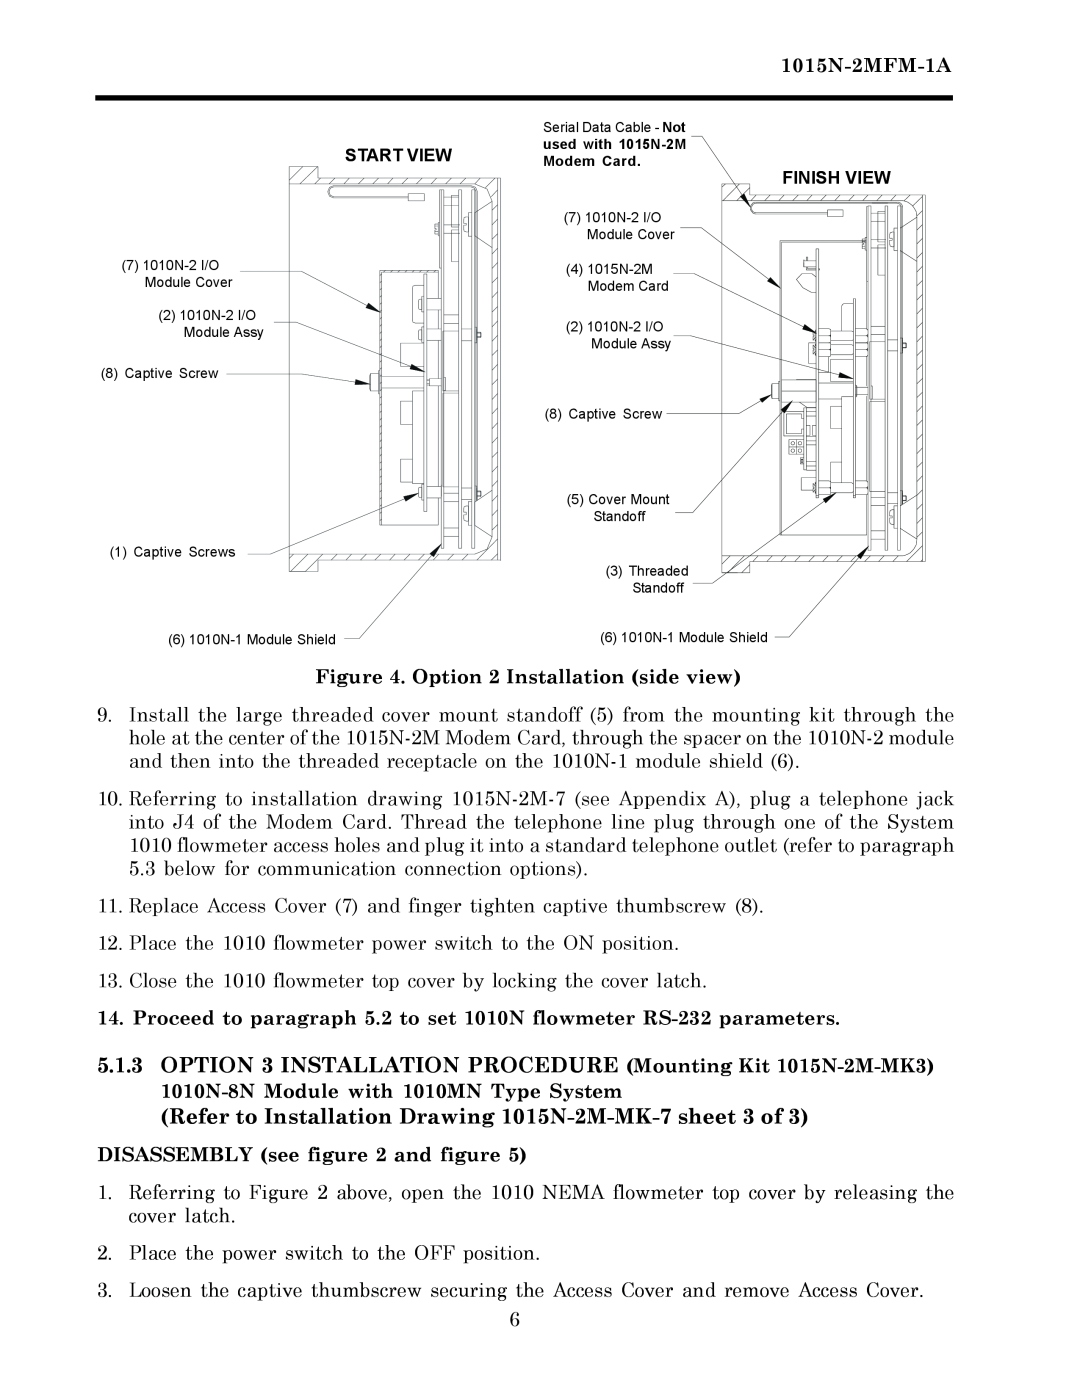 Siemens 1015N-2MFM-1A manual Refer to Installation Drawing 1015N-2M-MK-7 sheet 3 of 